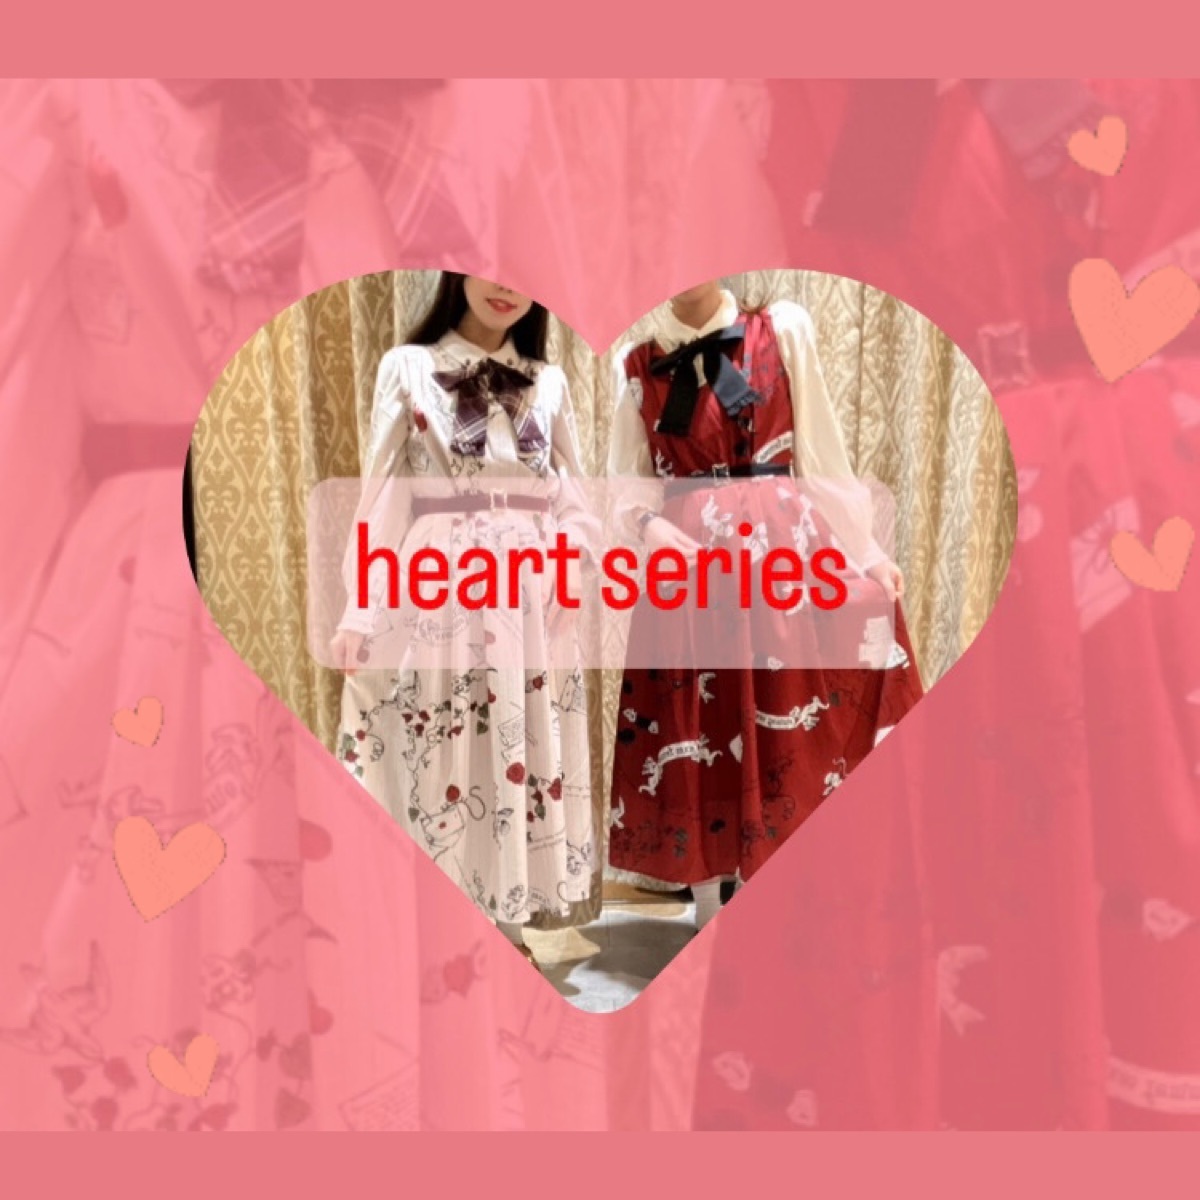 ෆ˚* Heart series ෆ˚*